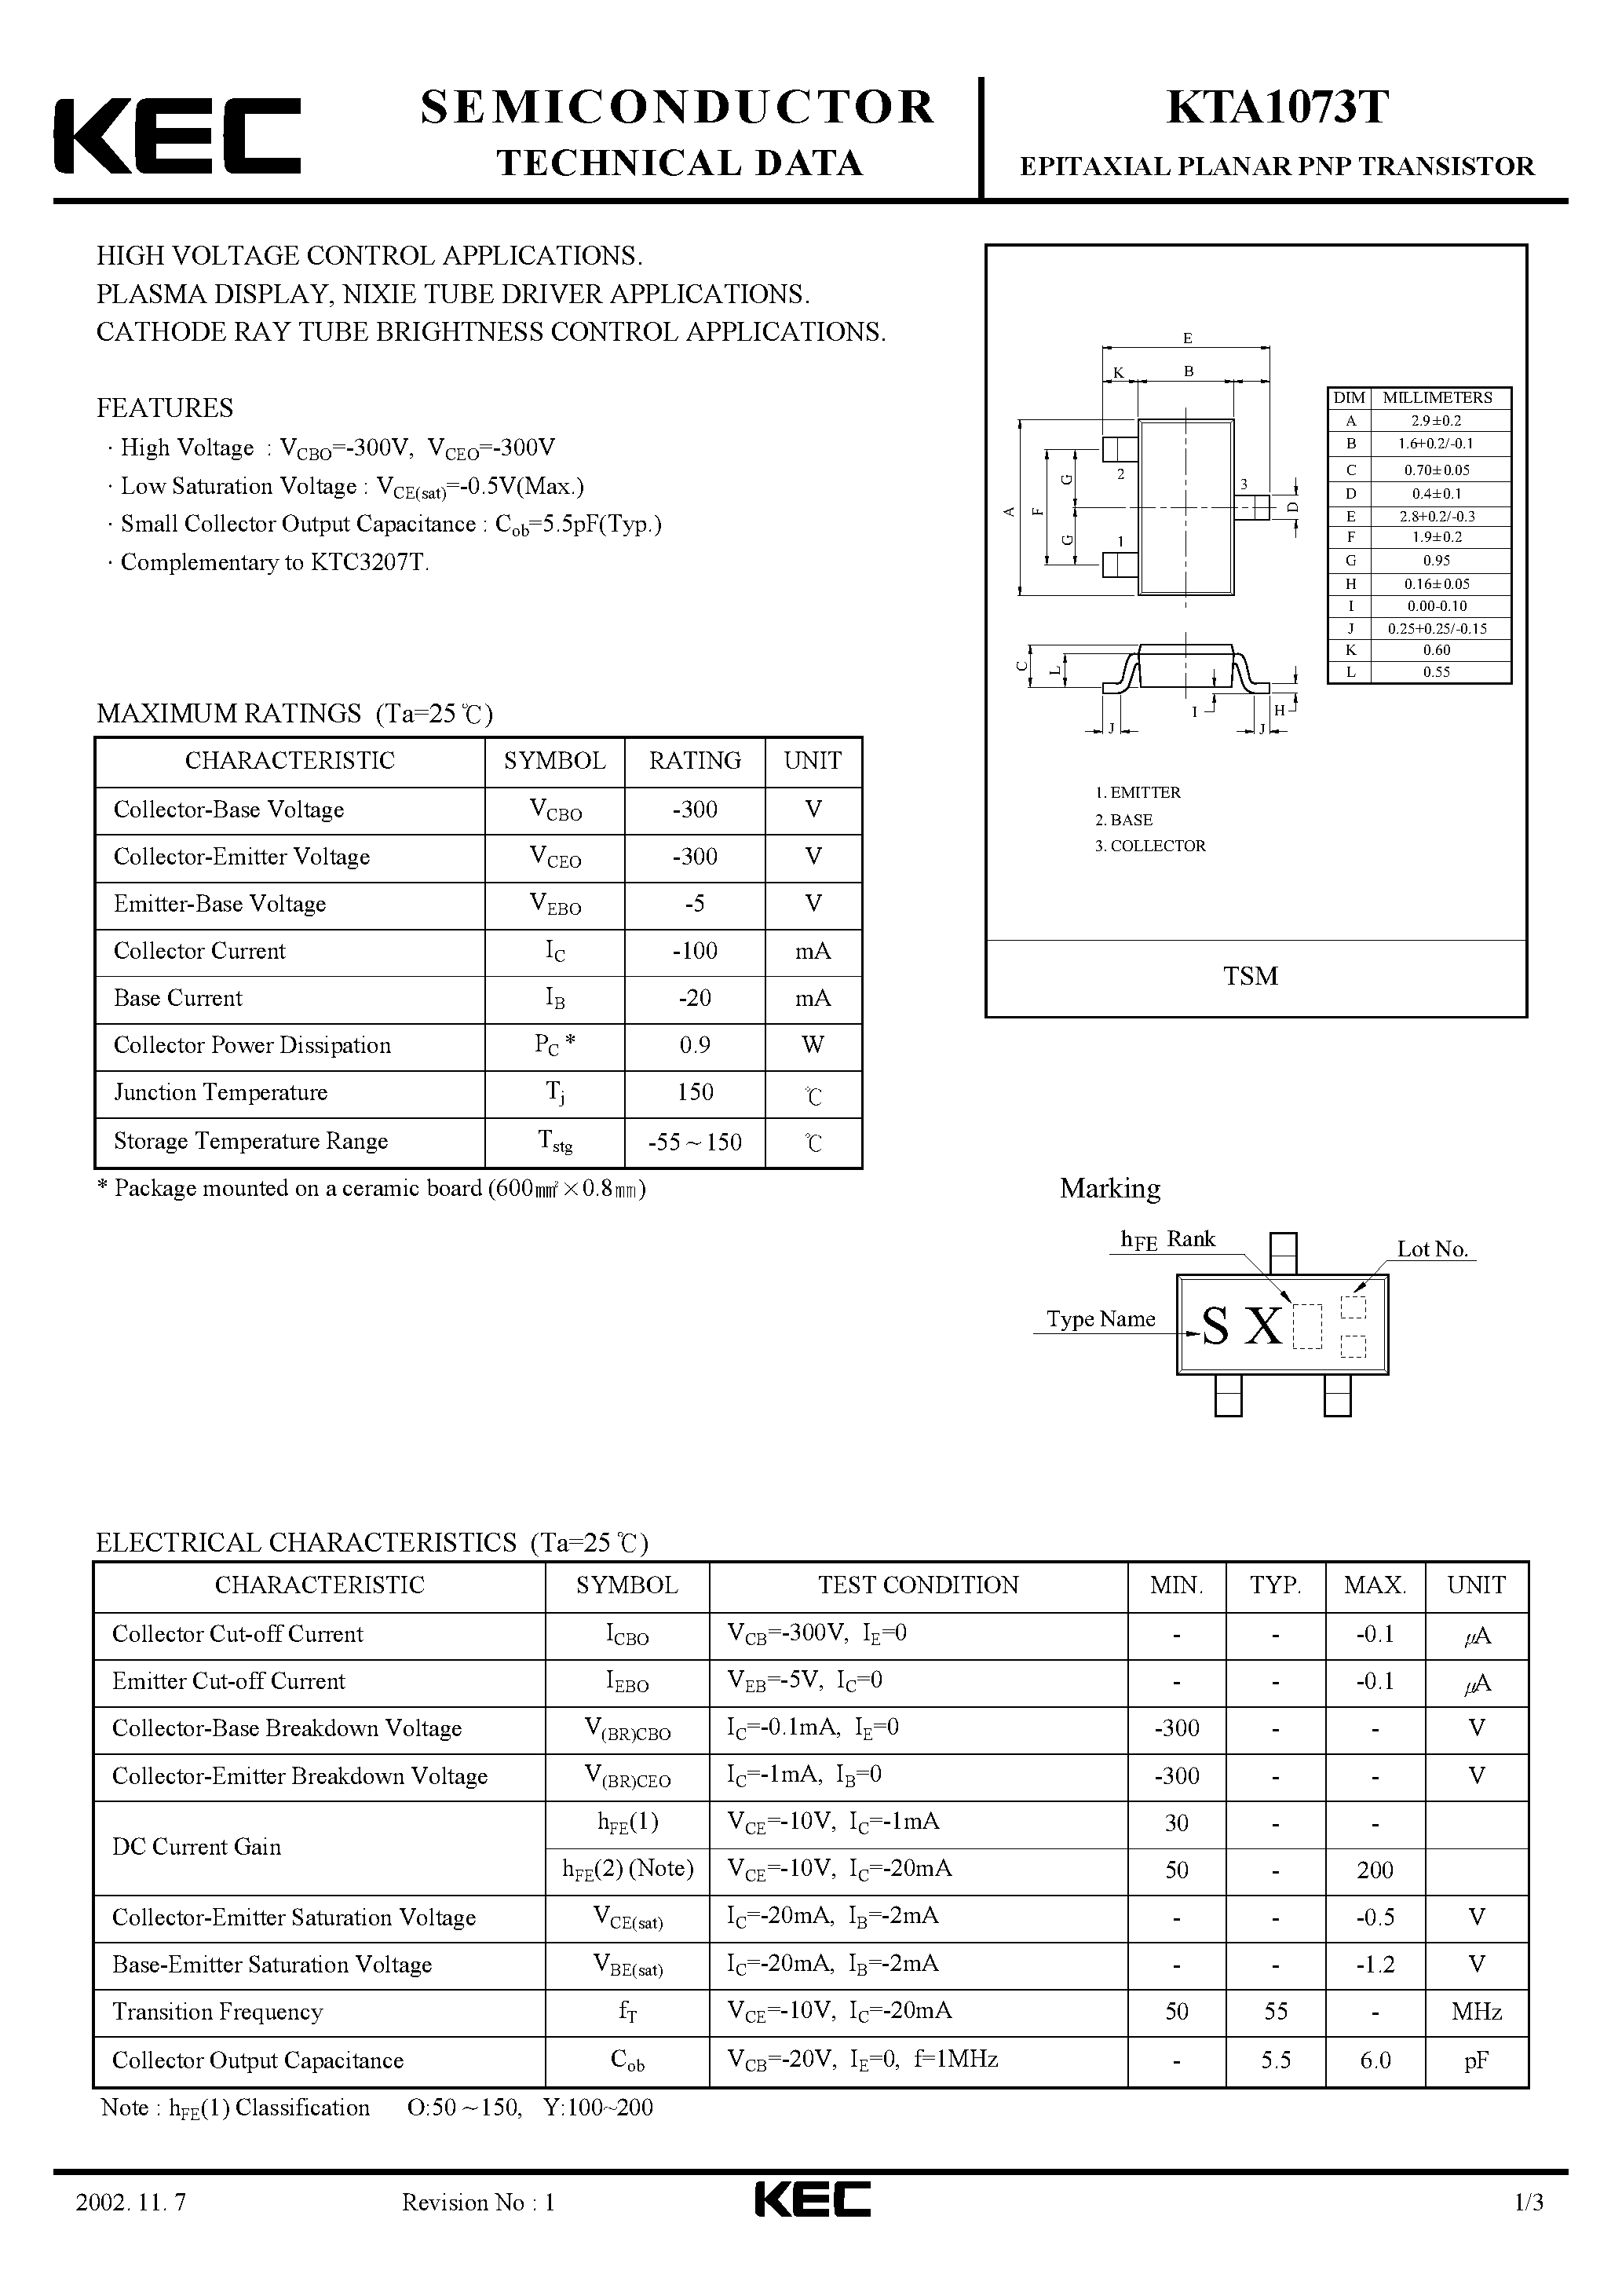 Datasheet KTA1073T - EPITAXIAL PLANAR PNP TRANSISTOR(HIGH VOLTAGE CONTROL/ PLASMA DISPLAY/ NIXIE TUBE DRIVER/CATHODE RAY TUBE BRIGHTNESS CONTROL) page 1